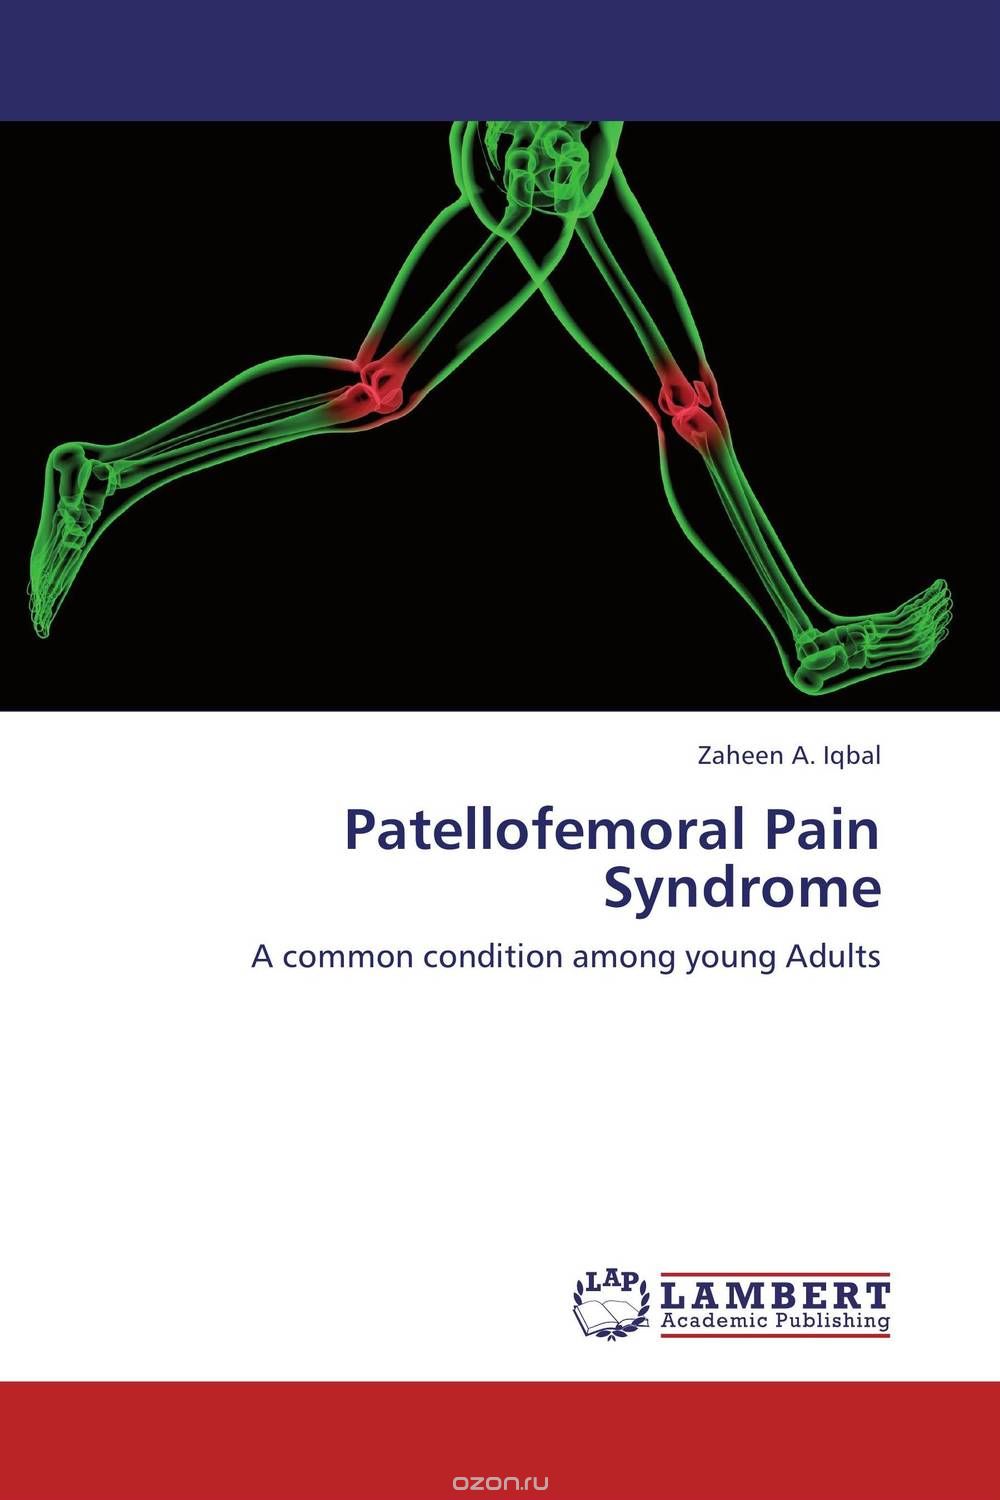 Скачать книгу "Patellofemoral Pain Syndrome"